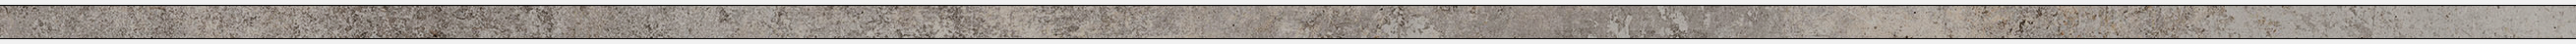 Del Conca Alchimia Grigio Hlc5 Naturale Border GRLC05LIS 2x120cm rectified 8,5mm